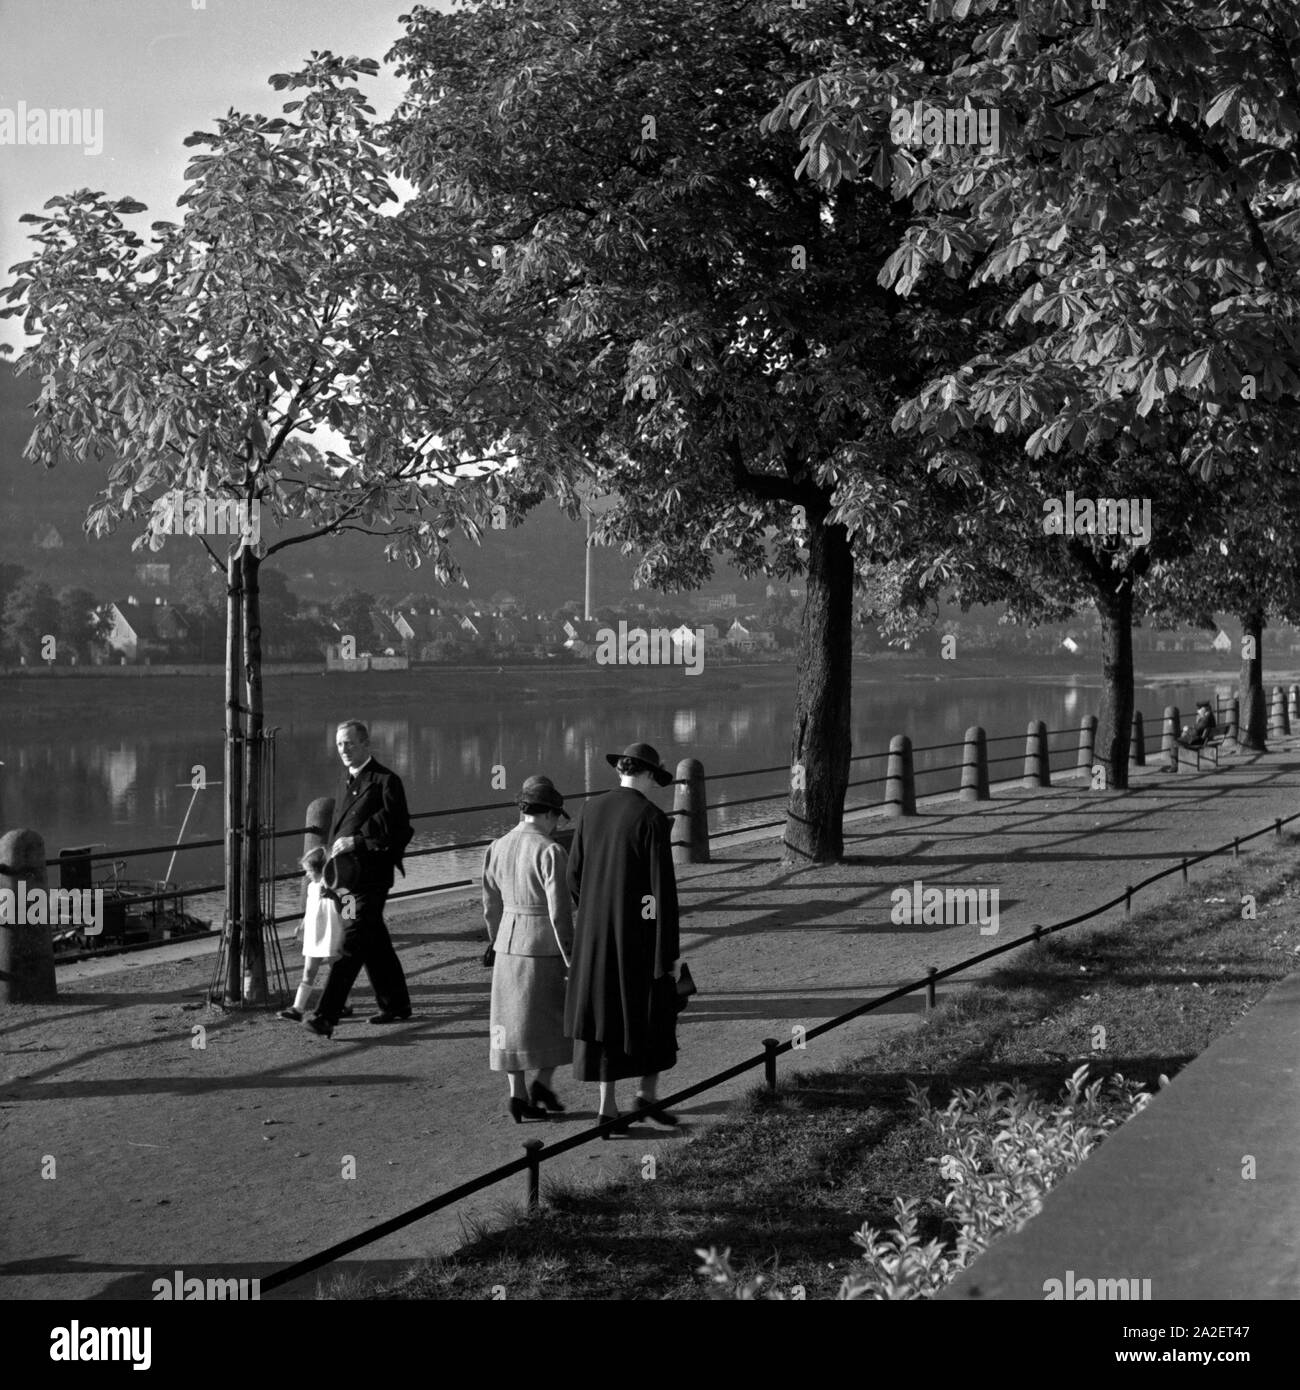 Passangen gehen am Ufer der Mosel in Trier spazieren, Deutschland 1930er Jahre. People strolling on the shre of river Moselle at Trier, Germany 1930s. Stock Photo